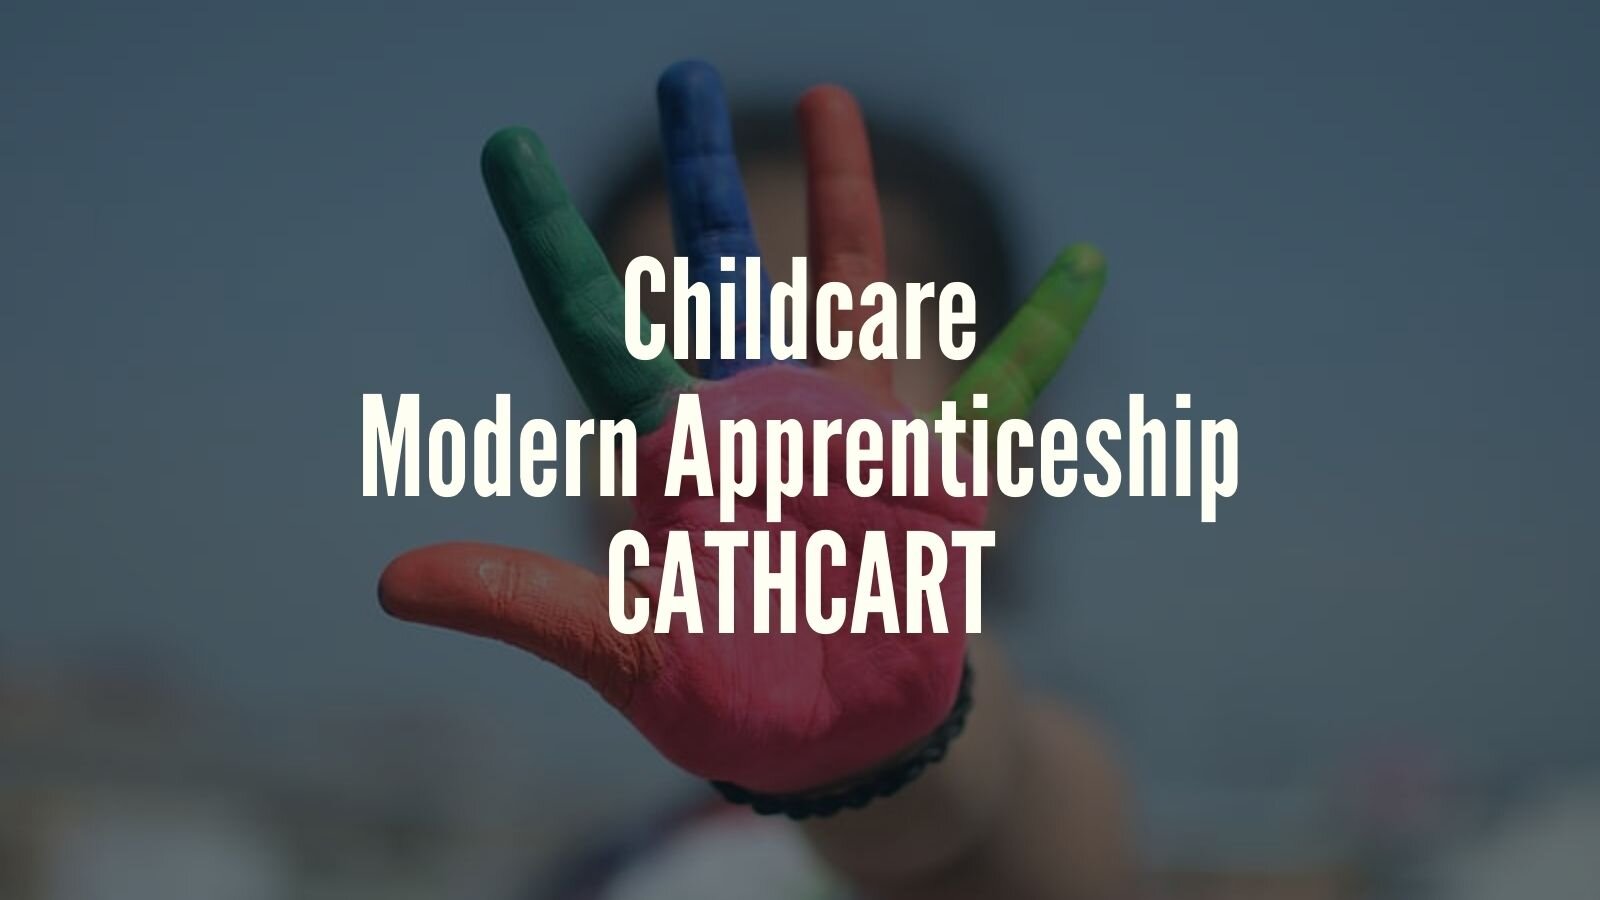 Childcare Modern Apprenticeship Vacancy Cathcart